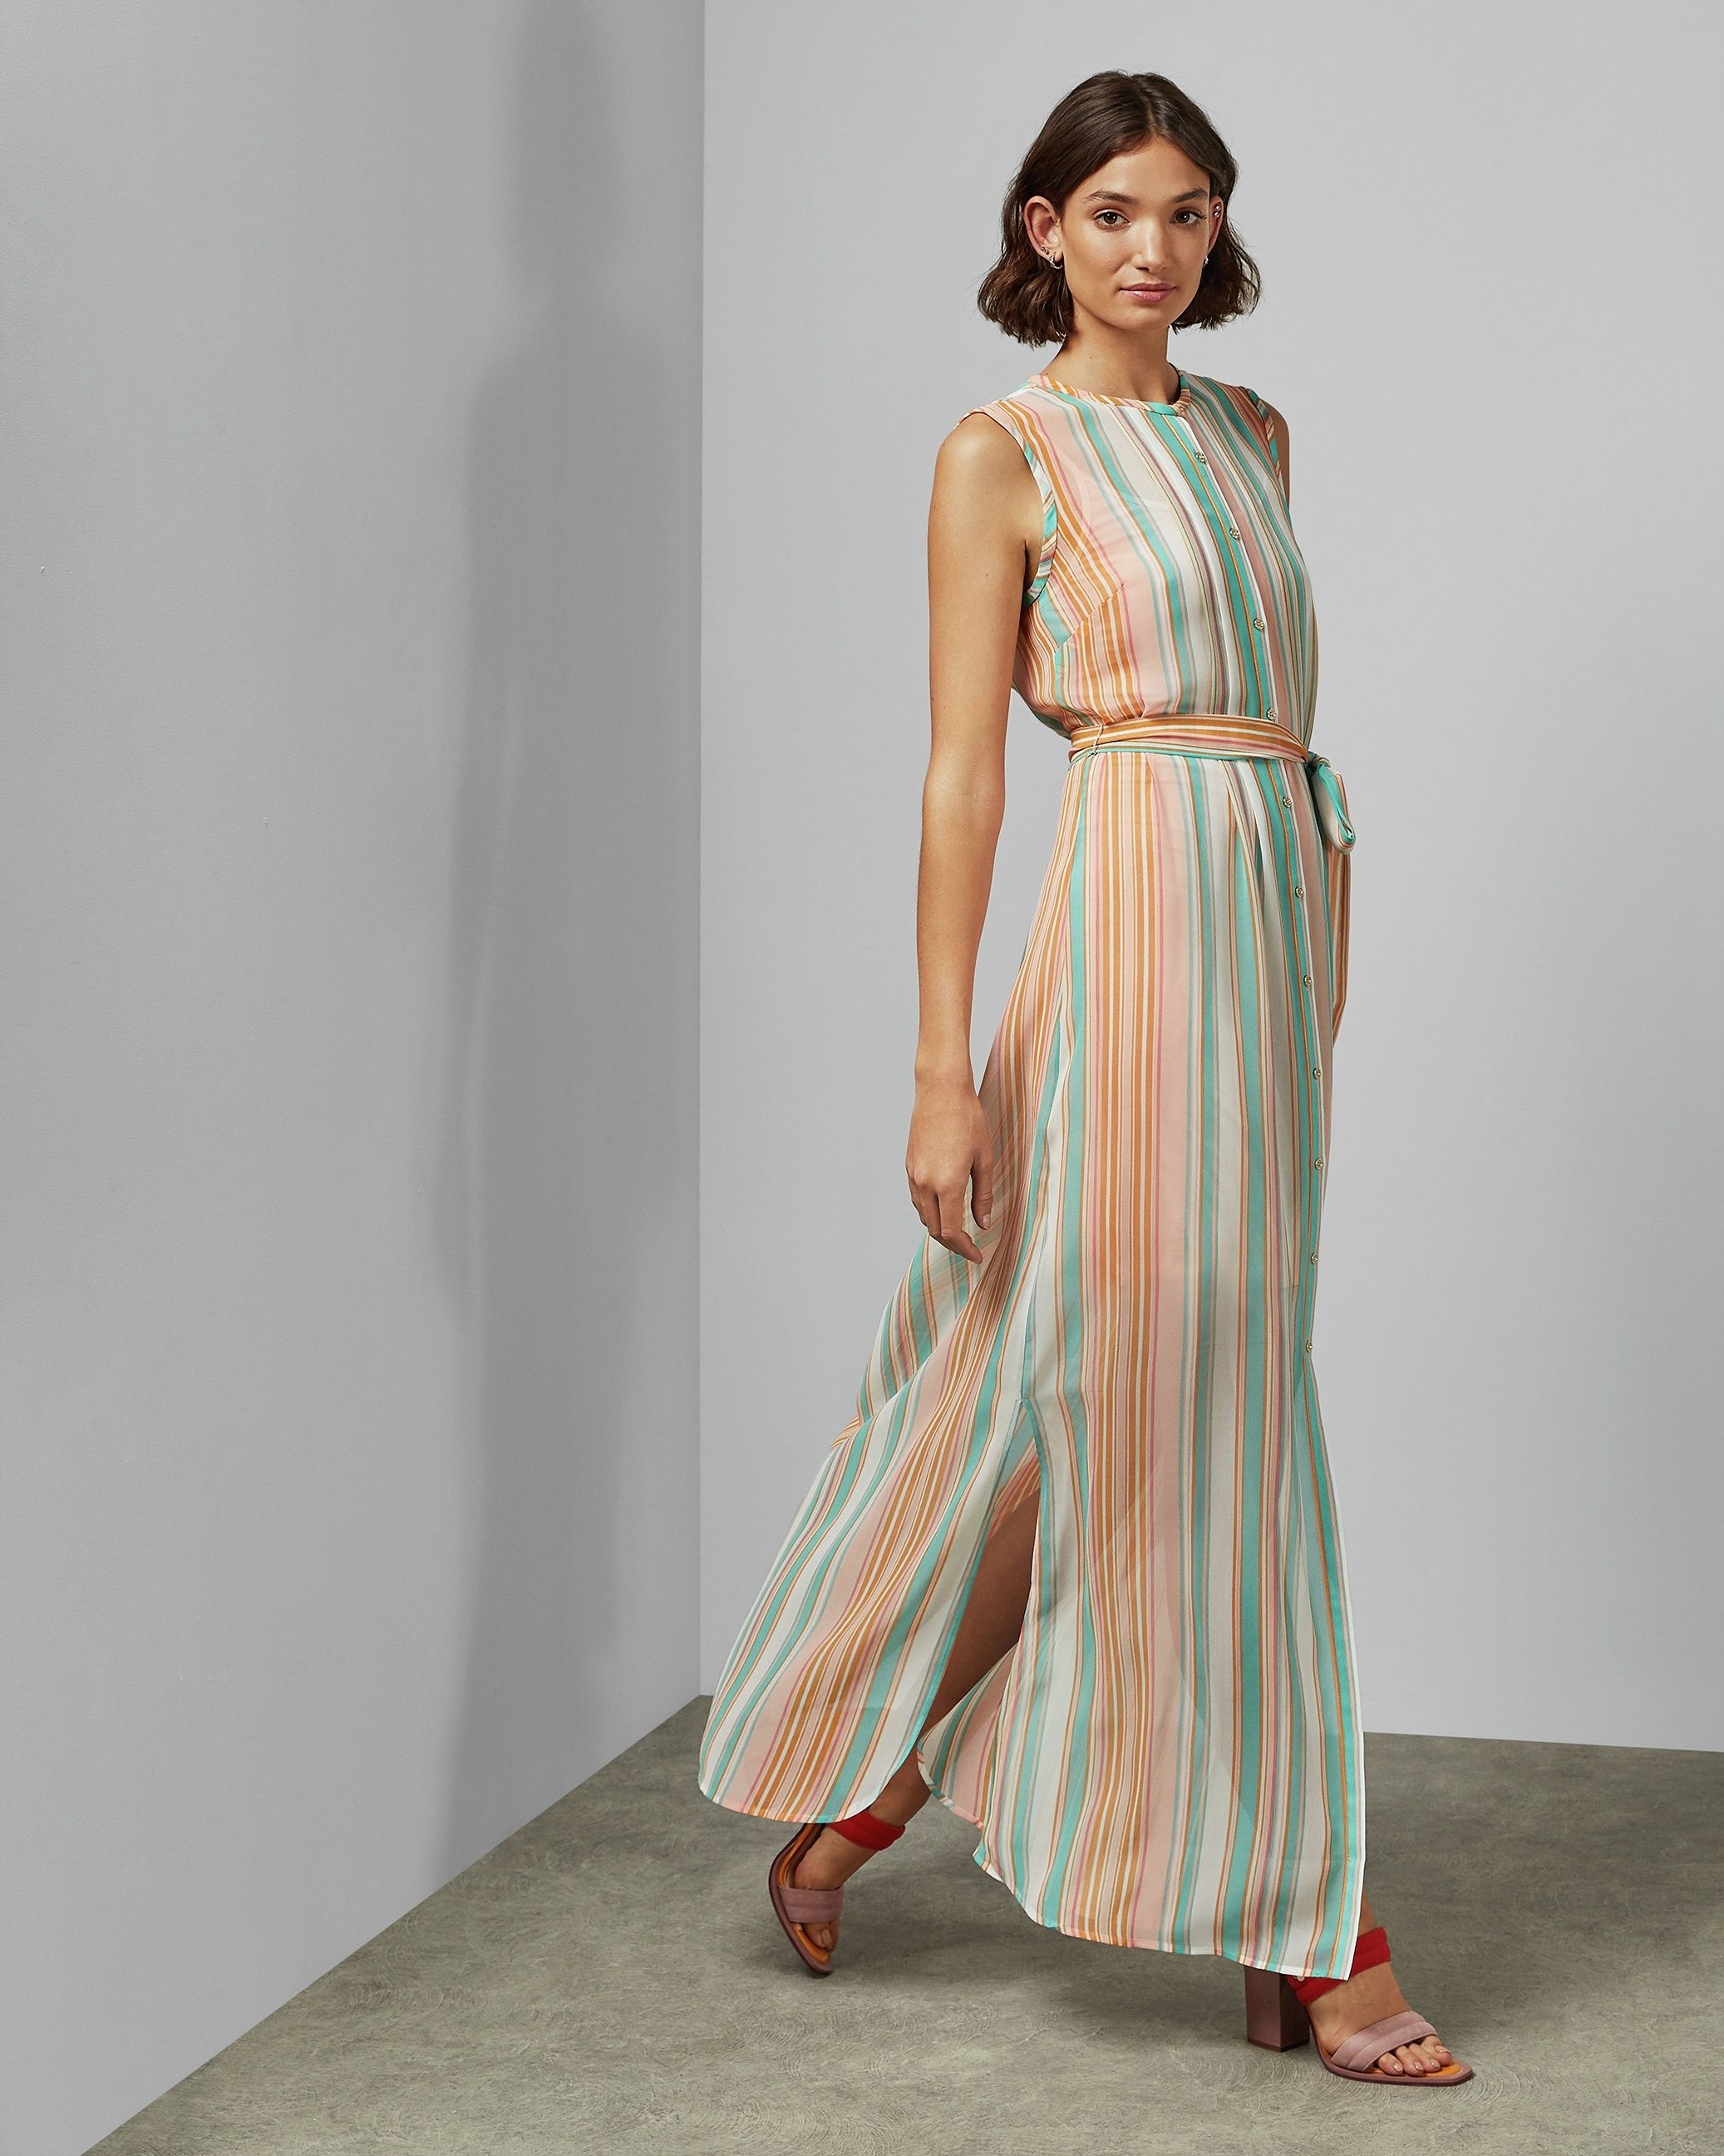 Cbn Candy Stripe Sleevedless Dress